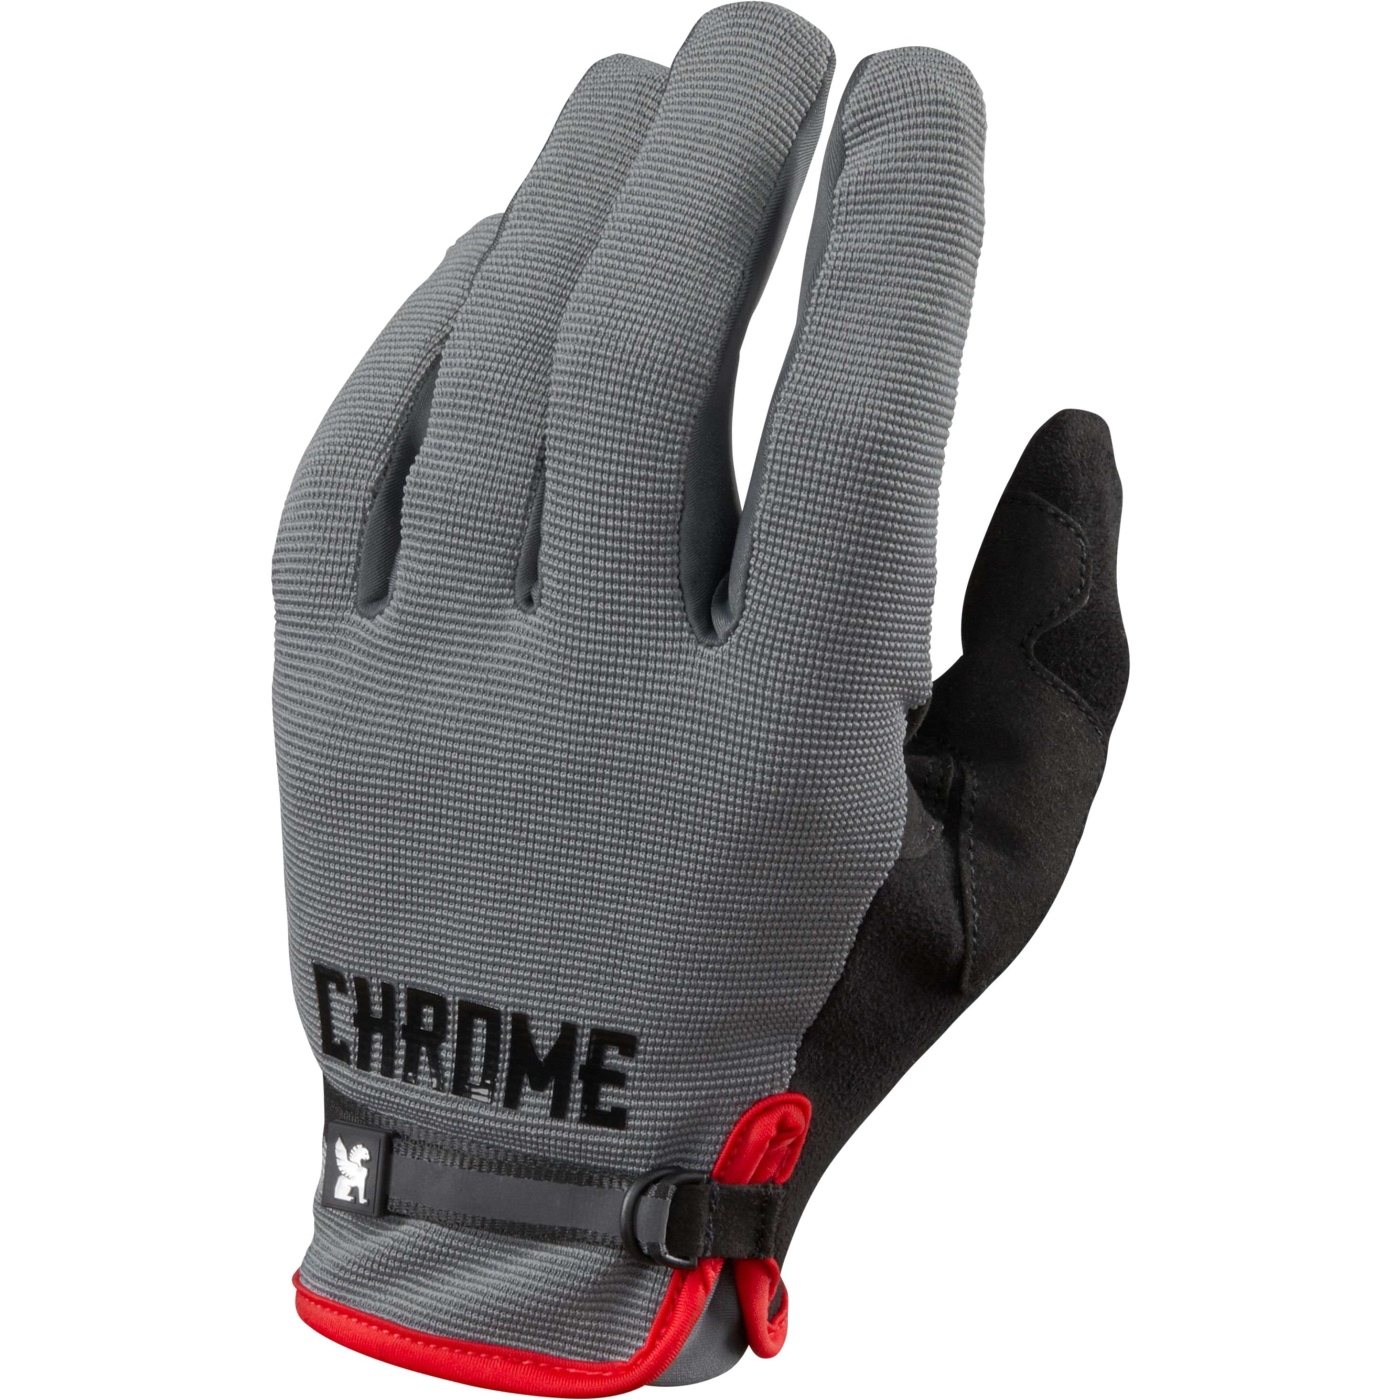 Productfoto van CHROME Cycling Gloves 2.0 - Grey/Black